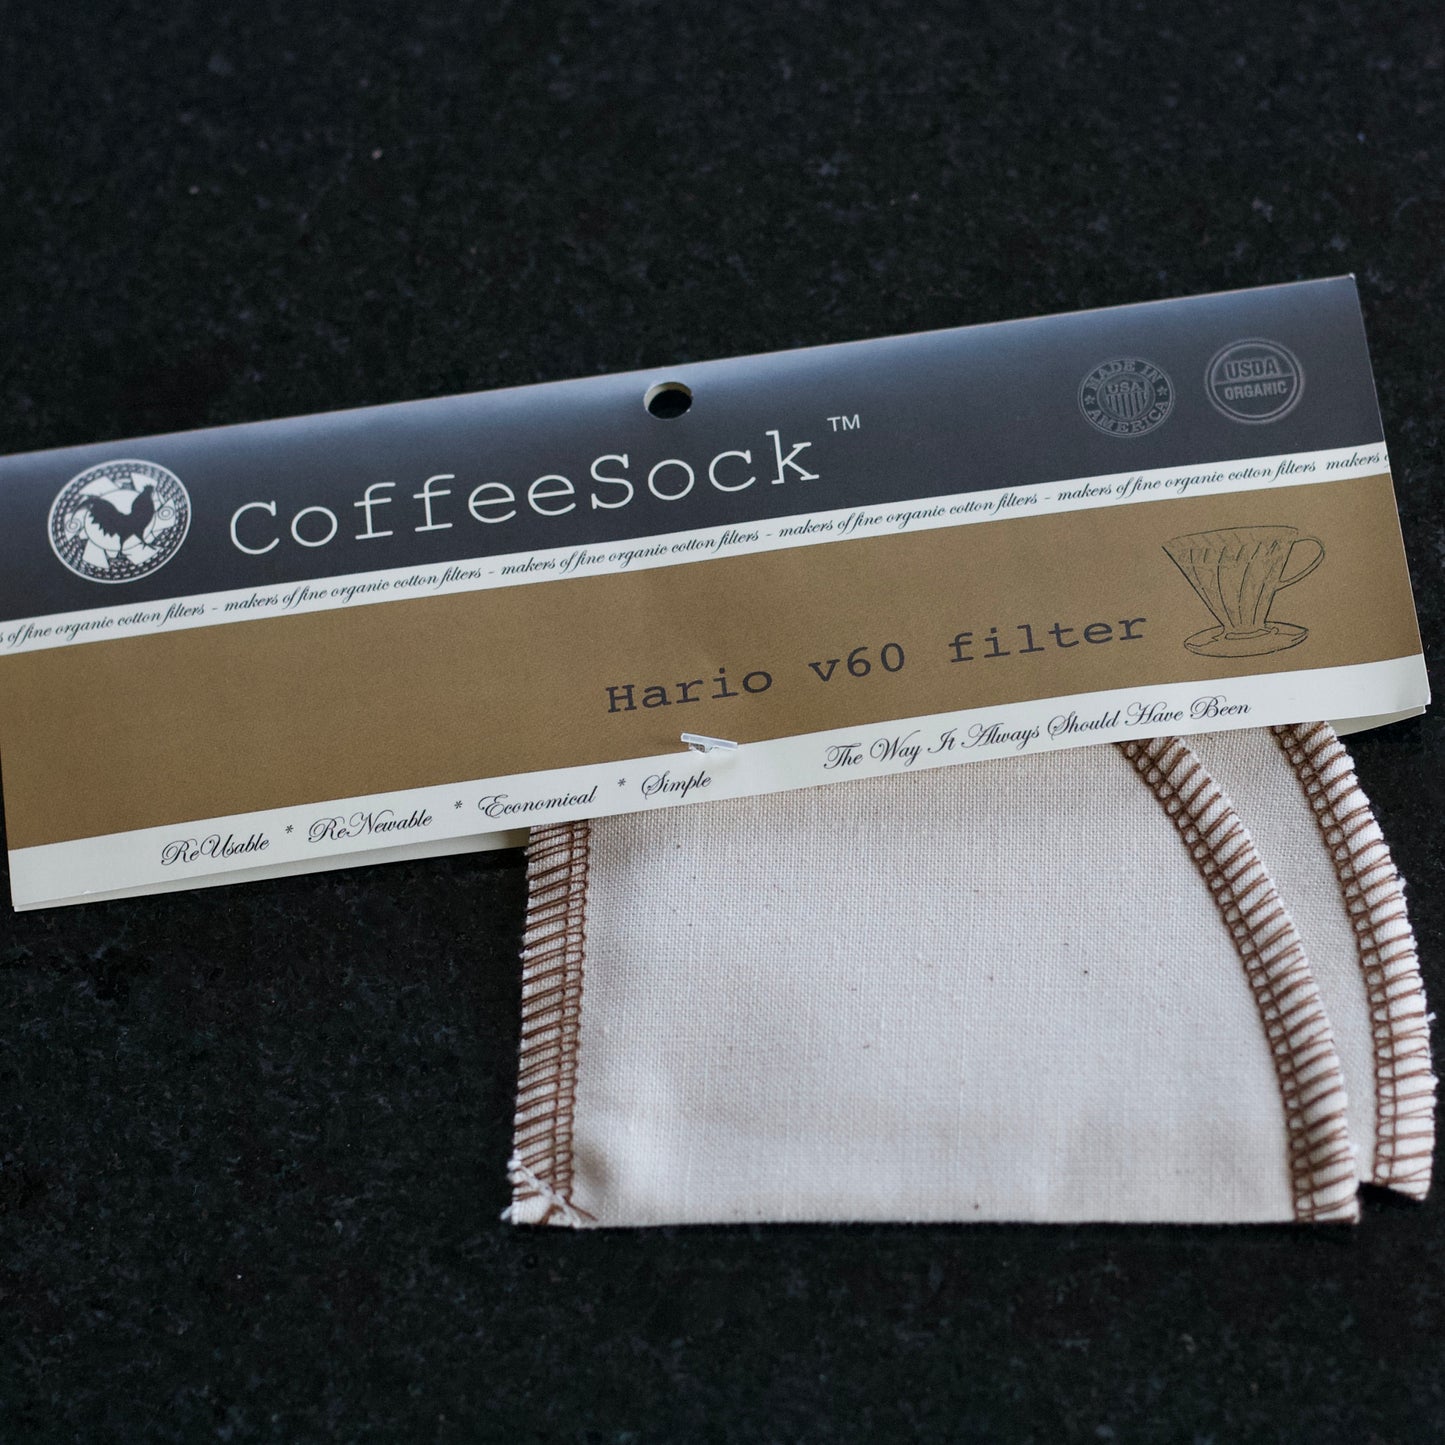 Coffee Sock Cloth Filter